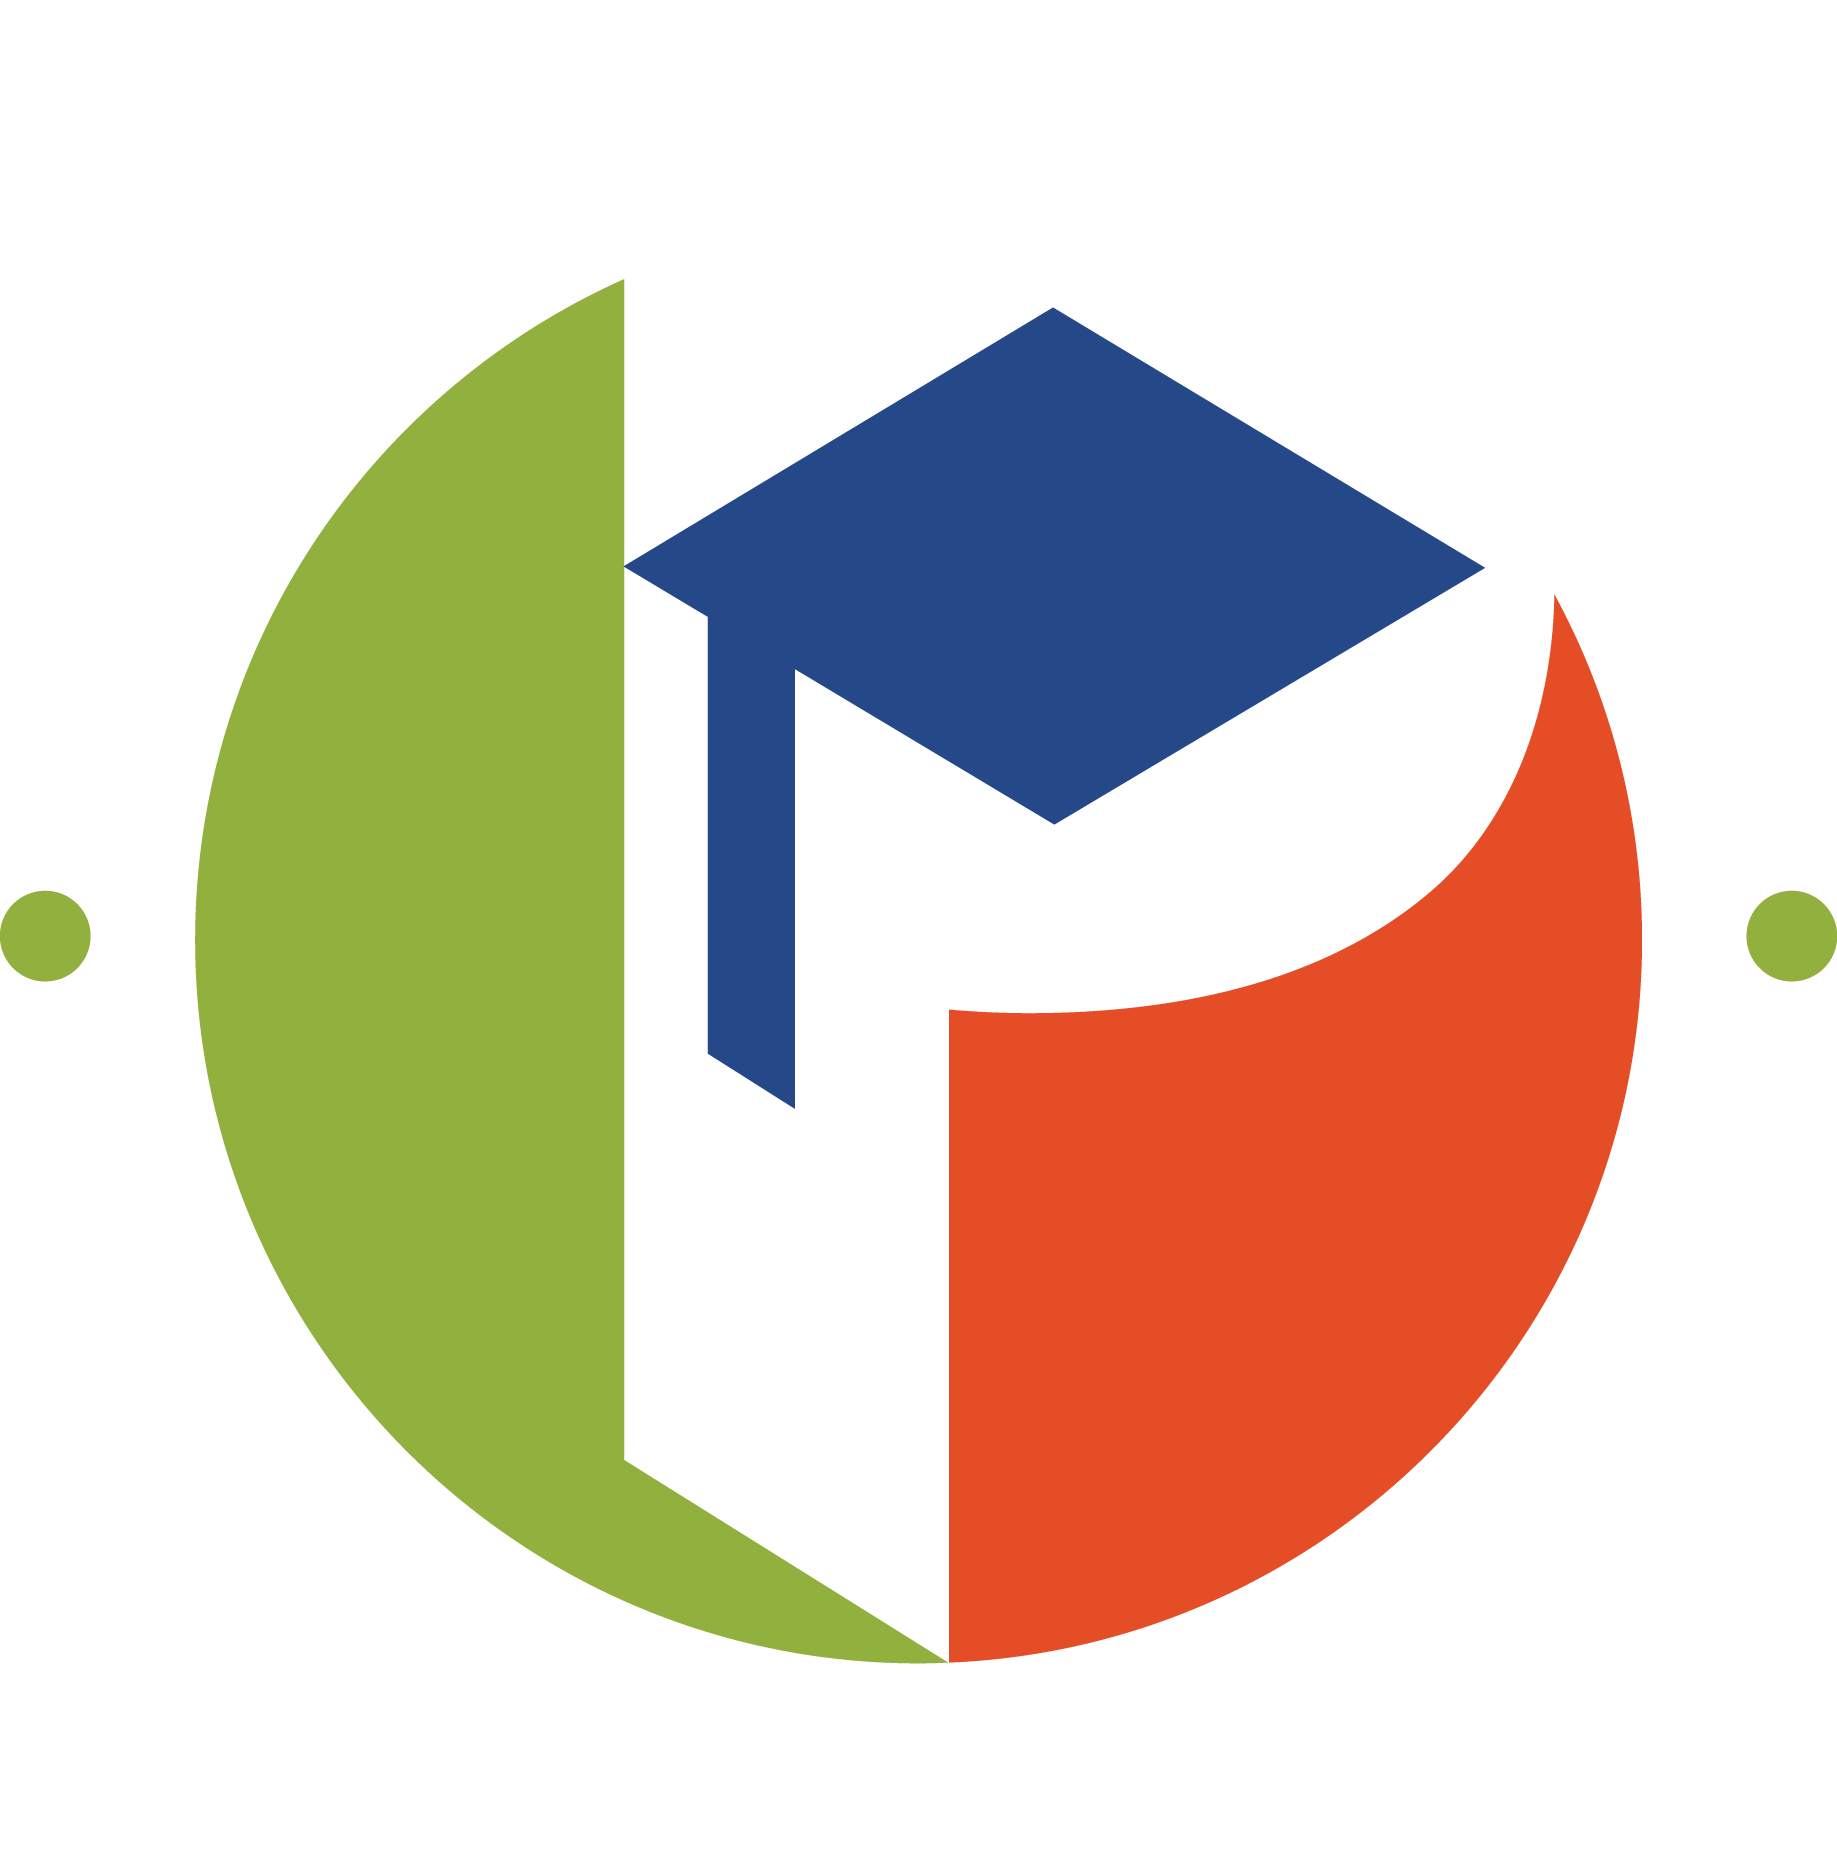 Links - - Pasco County School District (1837x1870)